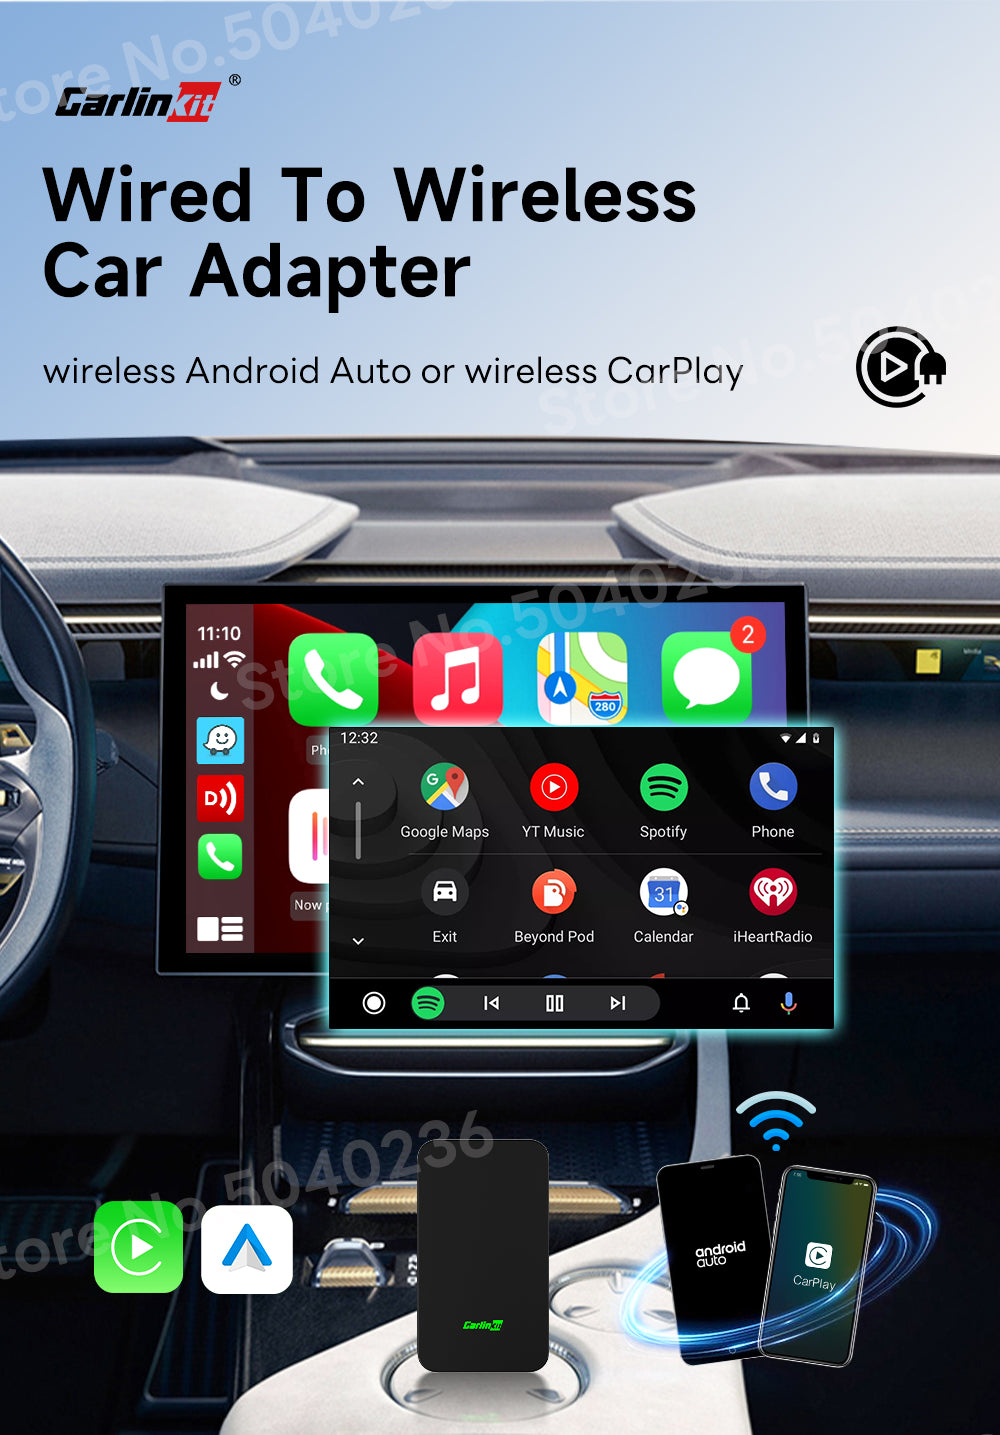 Carlinkit 5.0 2Air Wireless CarPlay Android Auto Wireless Box Two